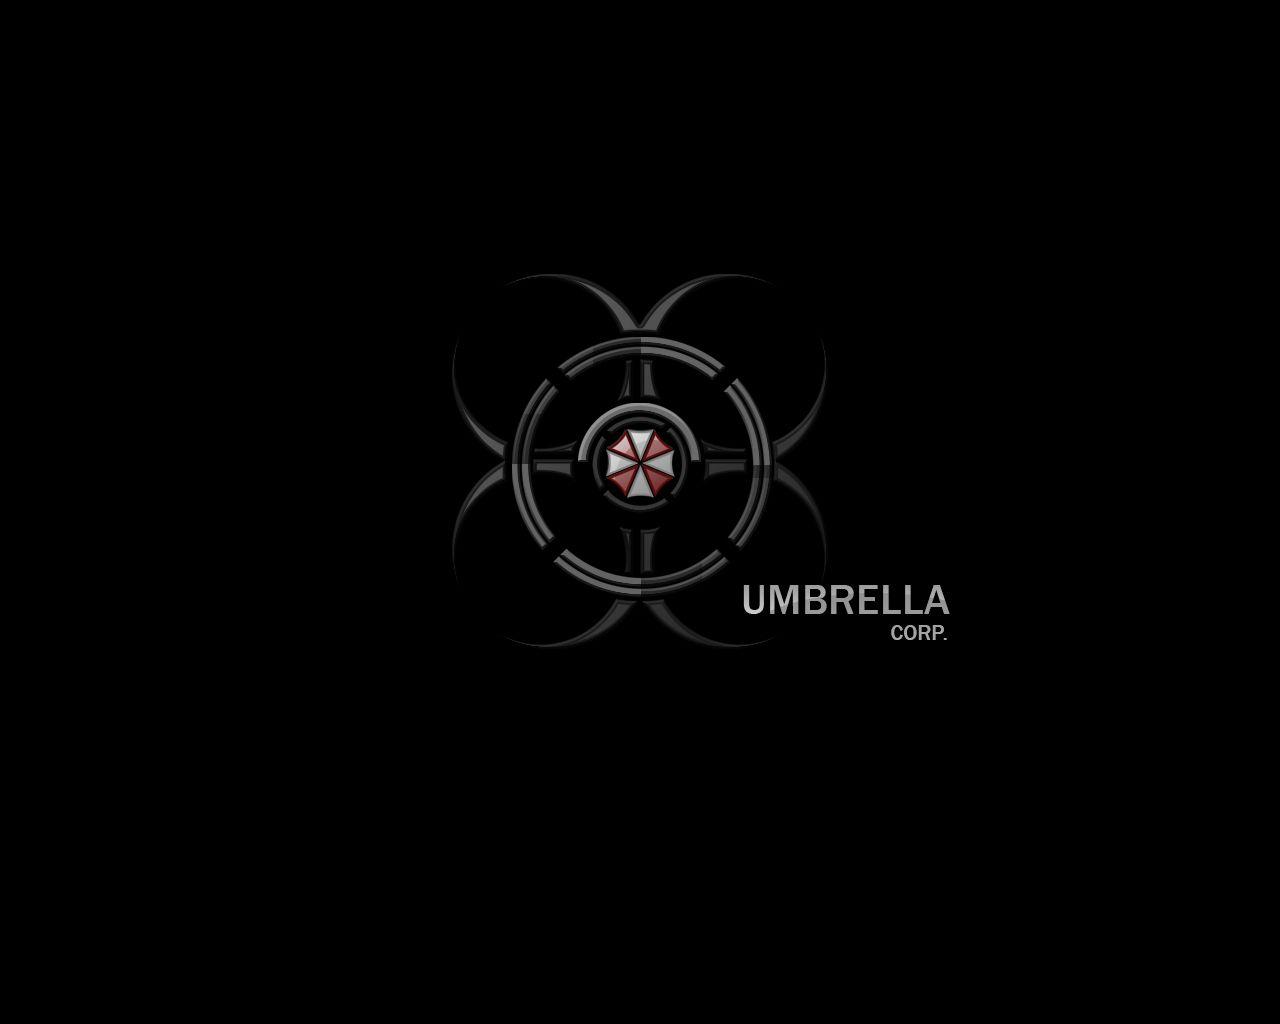 Umbrella Corps Wallpaper High Quality For iPhone Wallpaper HD